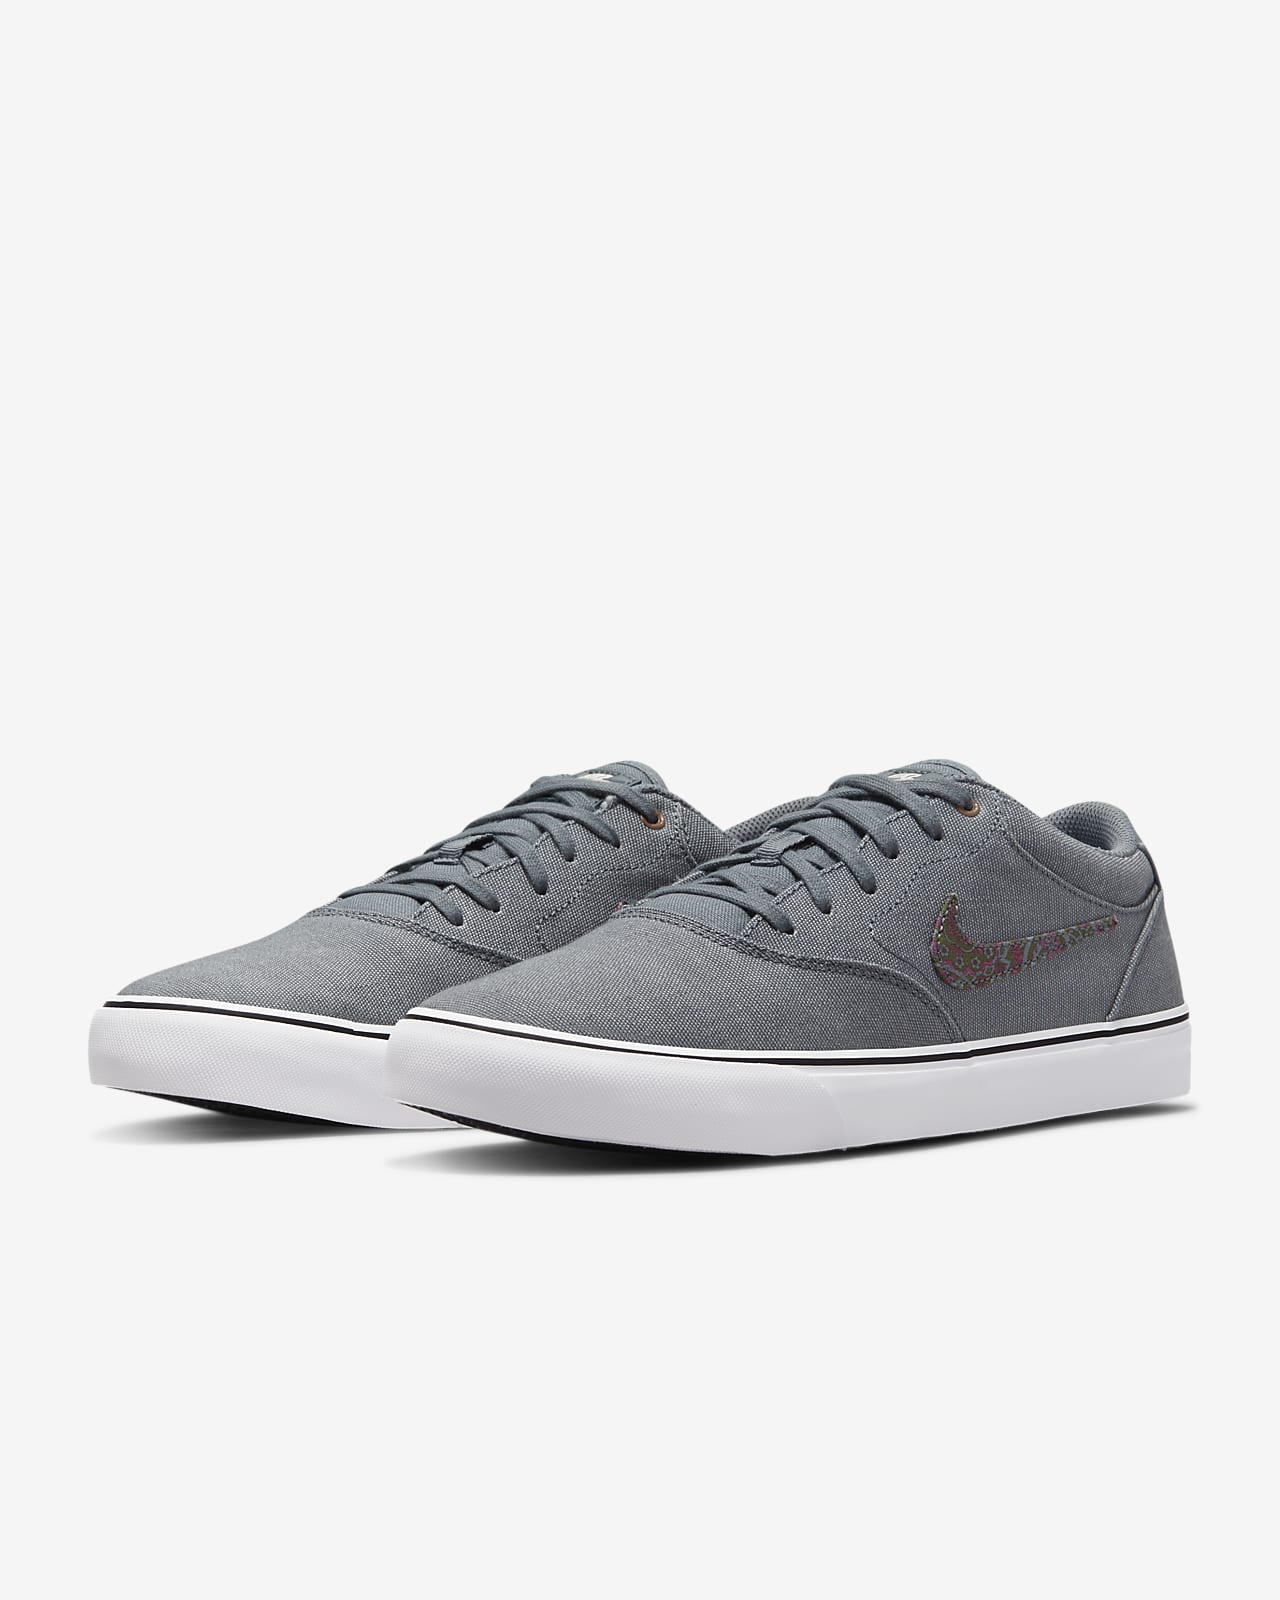 Nike SB Chron grey nike sb shoes 2 Canvas Premium Skate Shoes